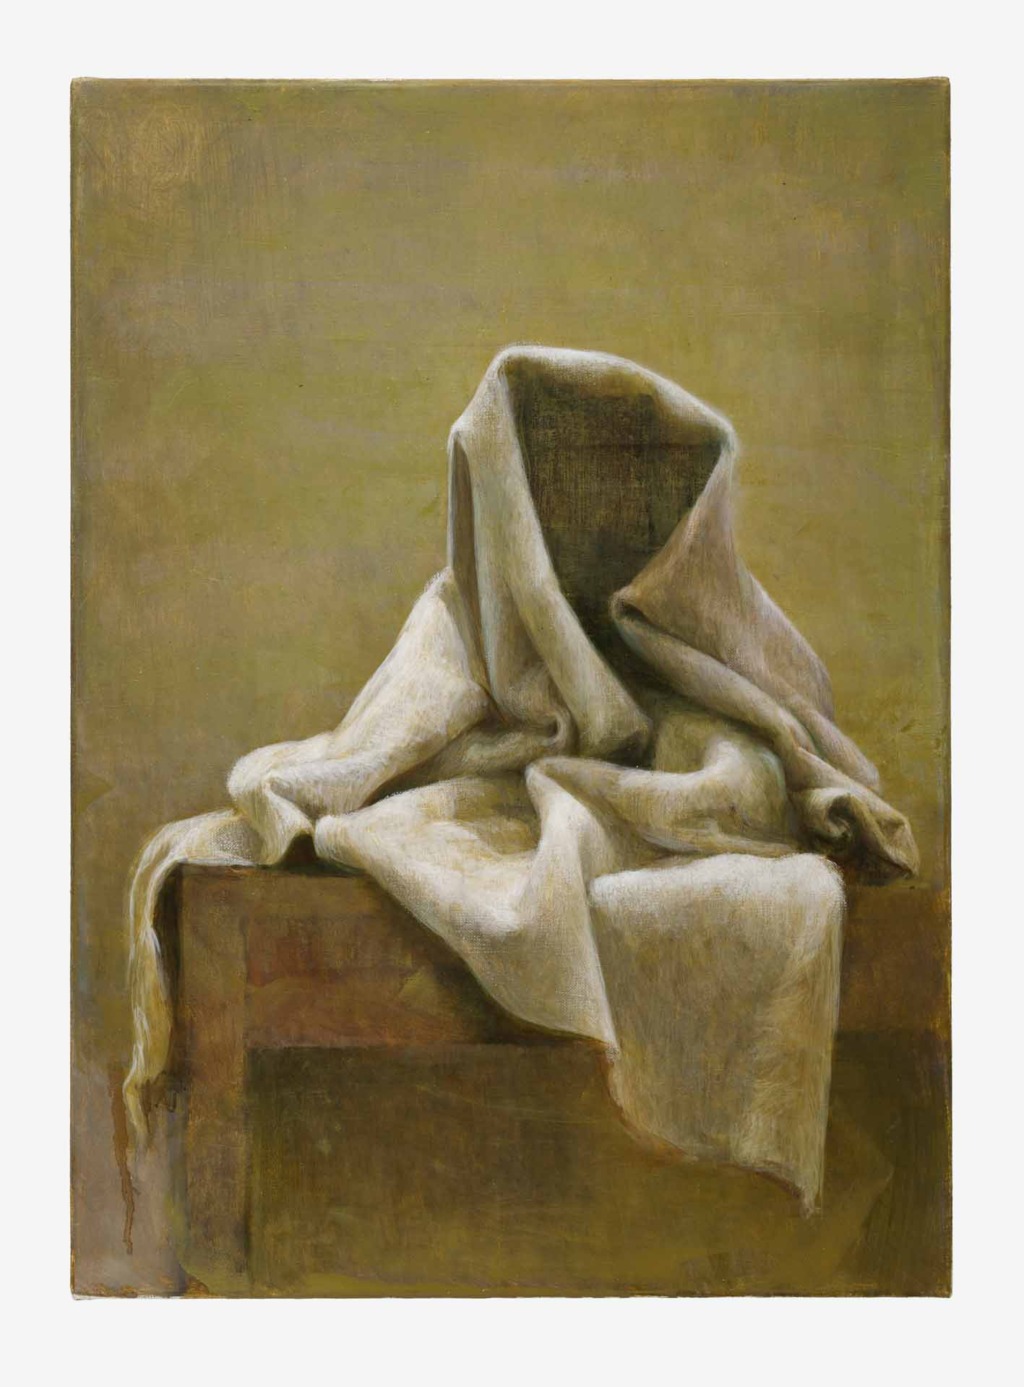 Gabi Hamm
Untitled #4 2020
58 x 42 cm
Oil on canvas
